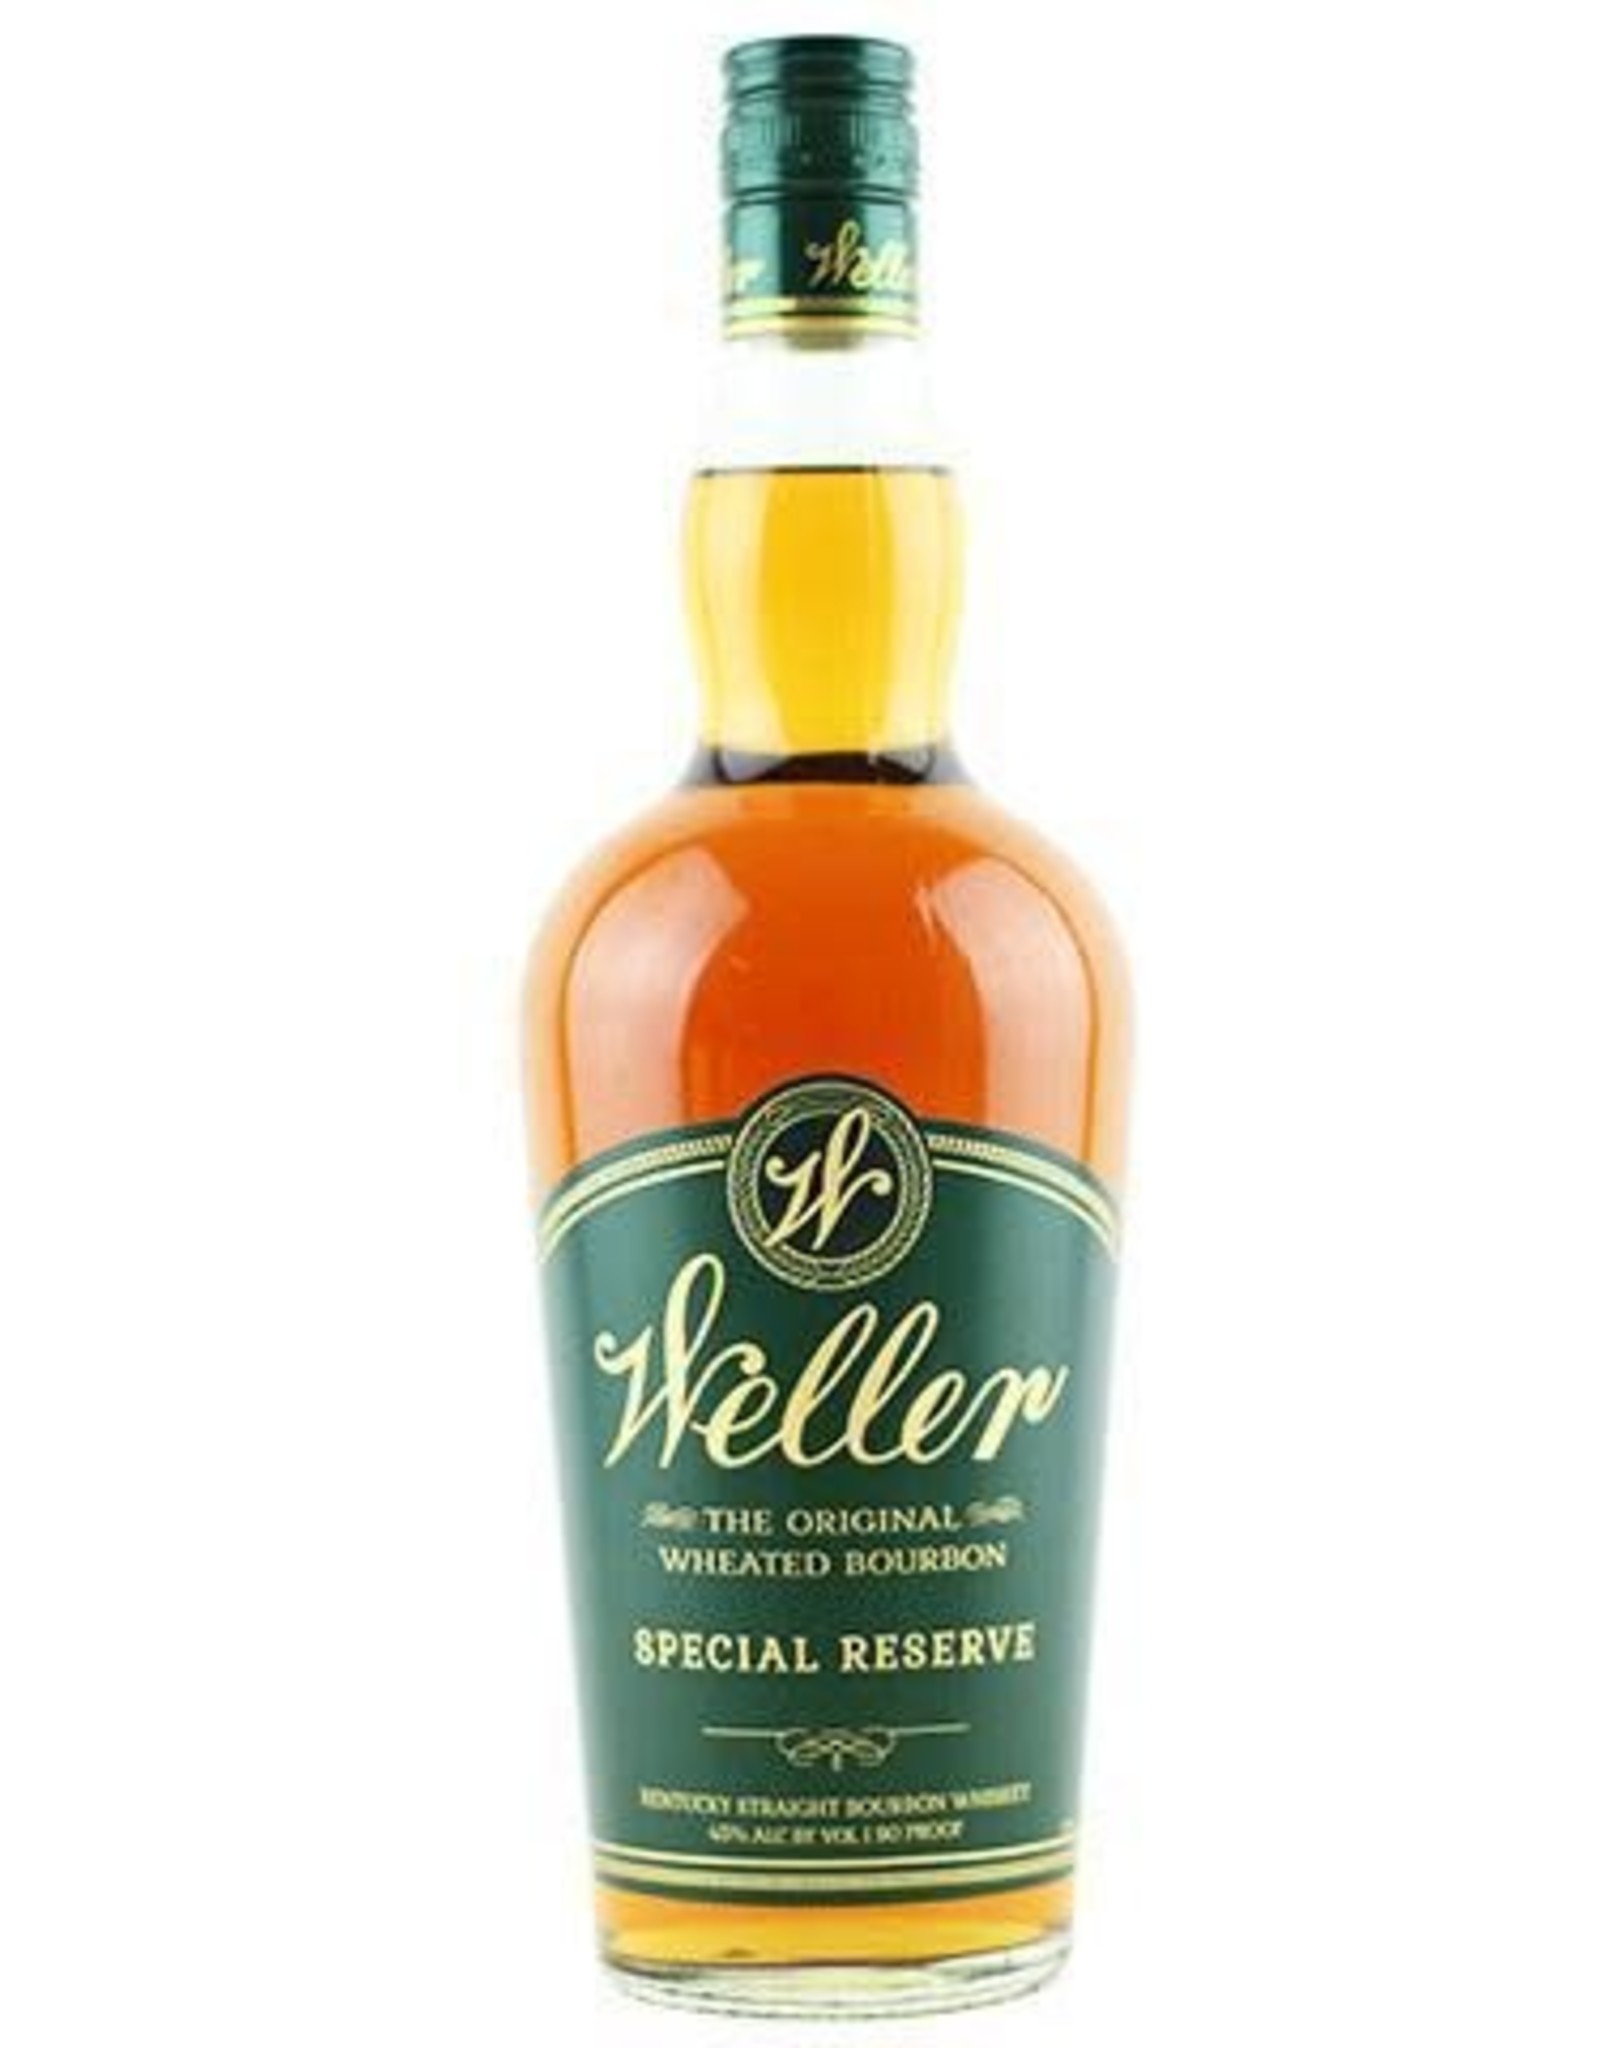 Wl Weller Wl Weller Special Reserve Bourbon